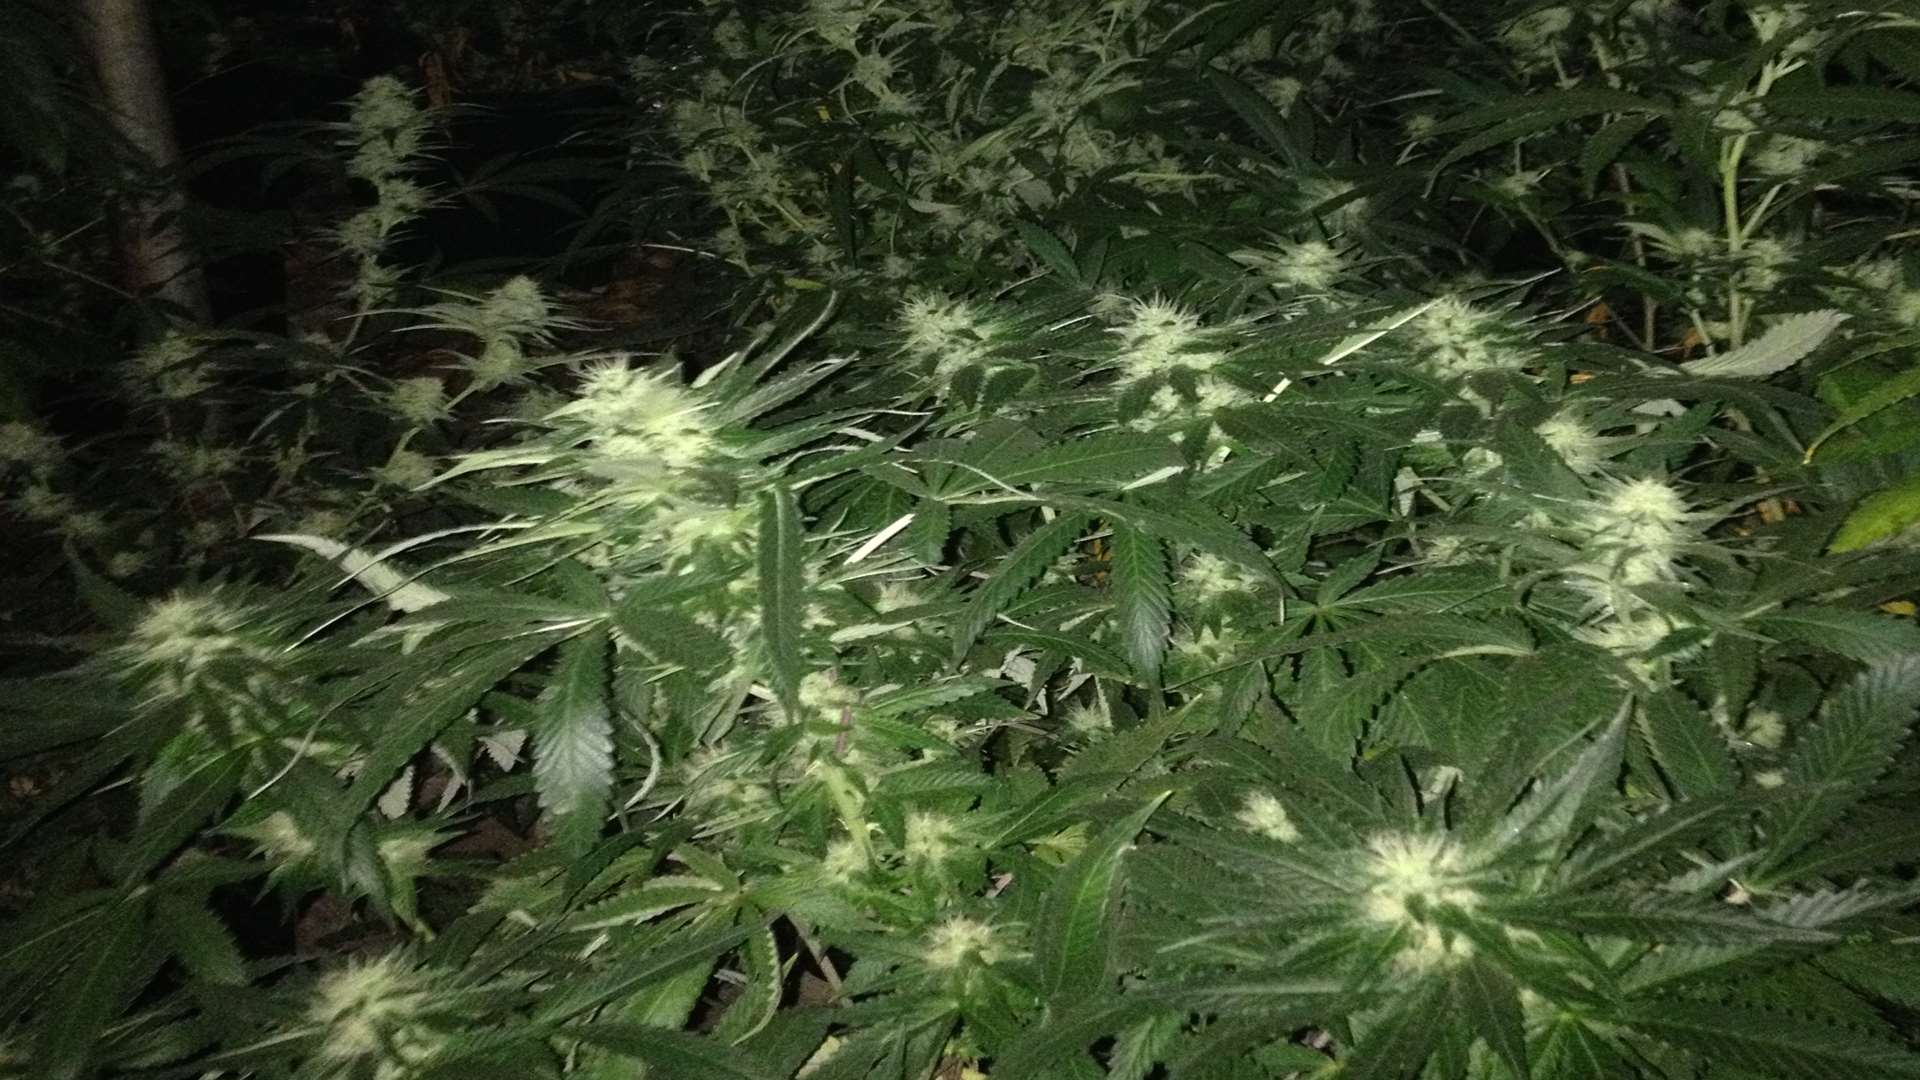 The cannabis factory was hidden in a barn